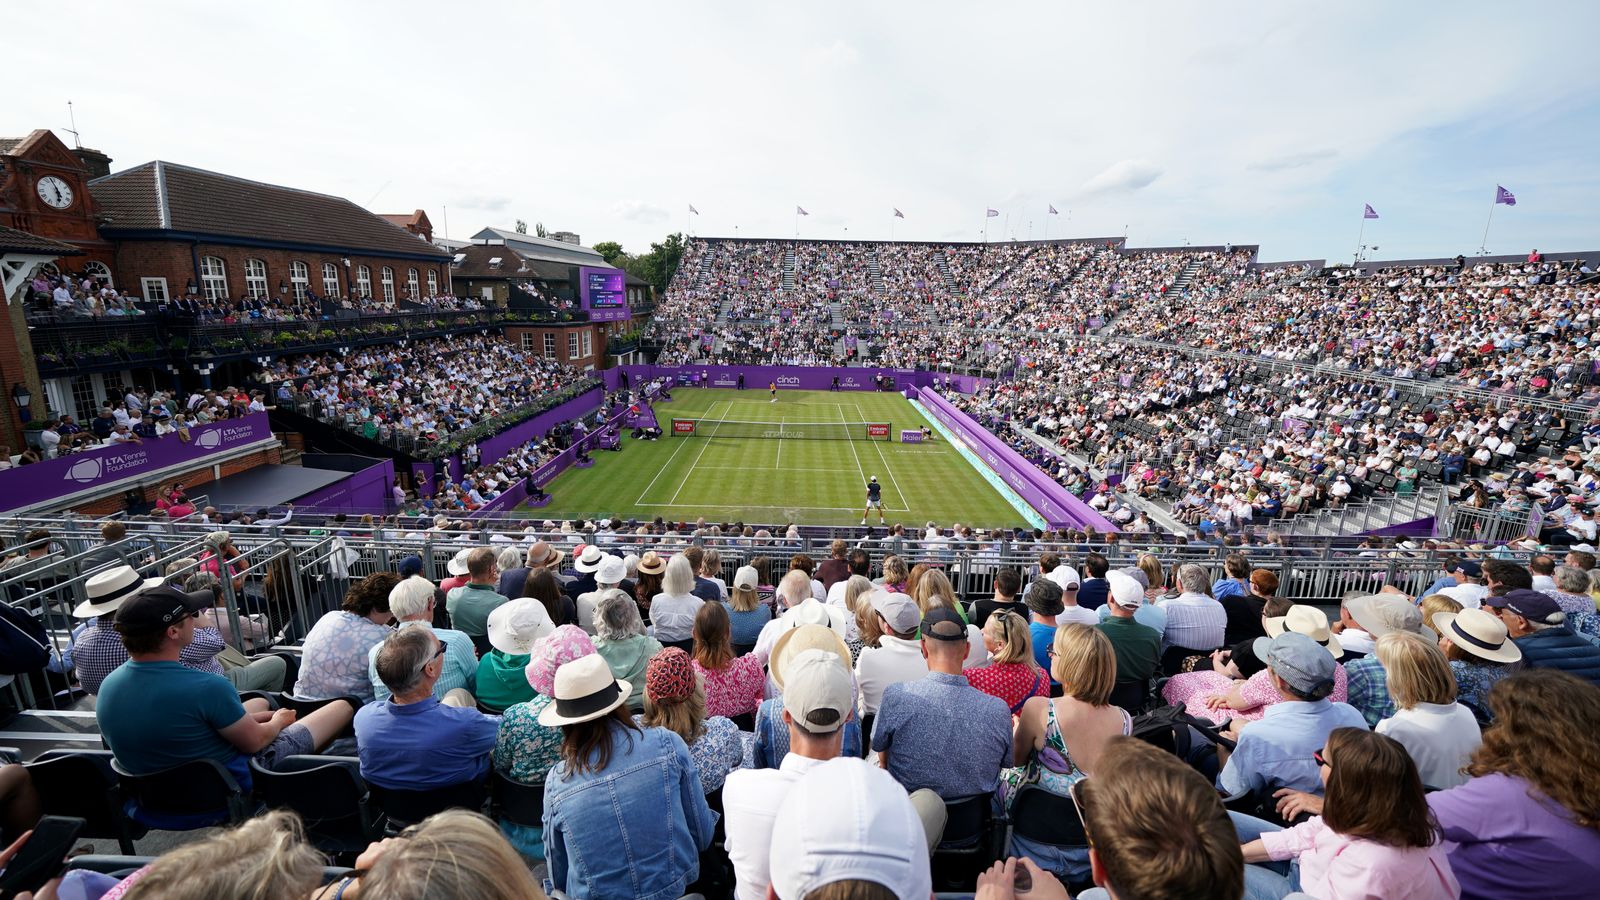 WTA Tour to visit Queen’s Club for first time in 2025 as part of grass-court tennis season calendar shuffle | Tennis News